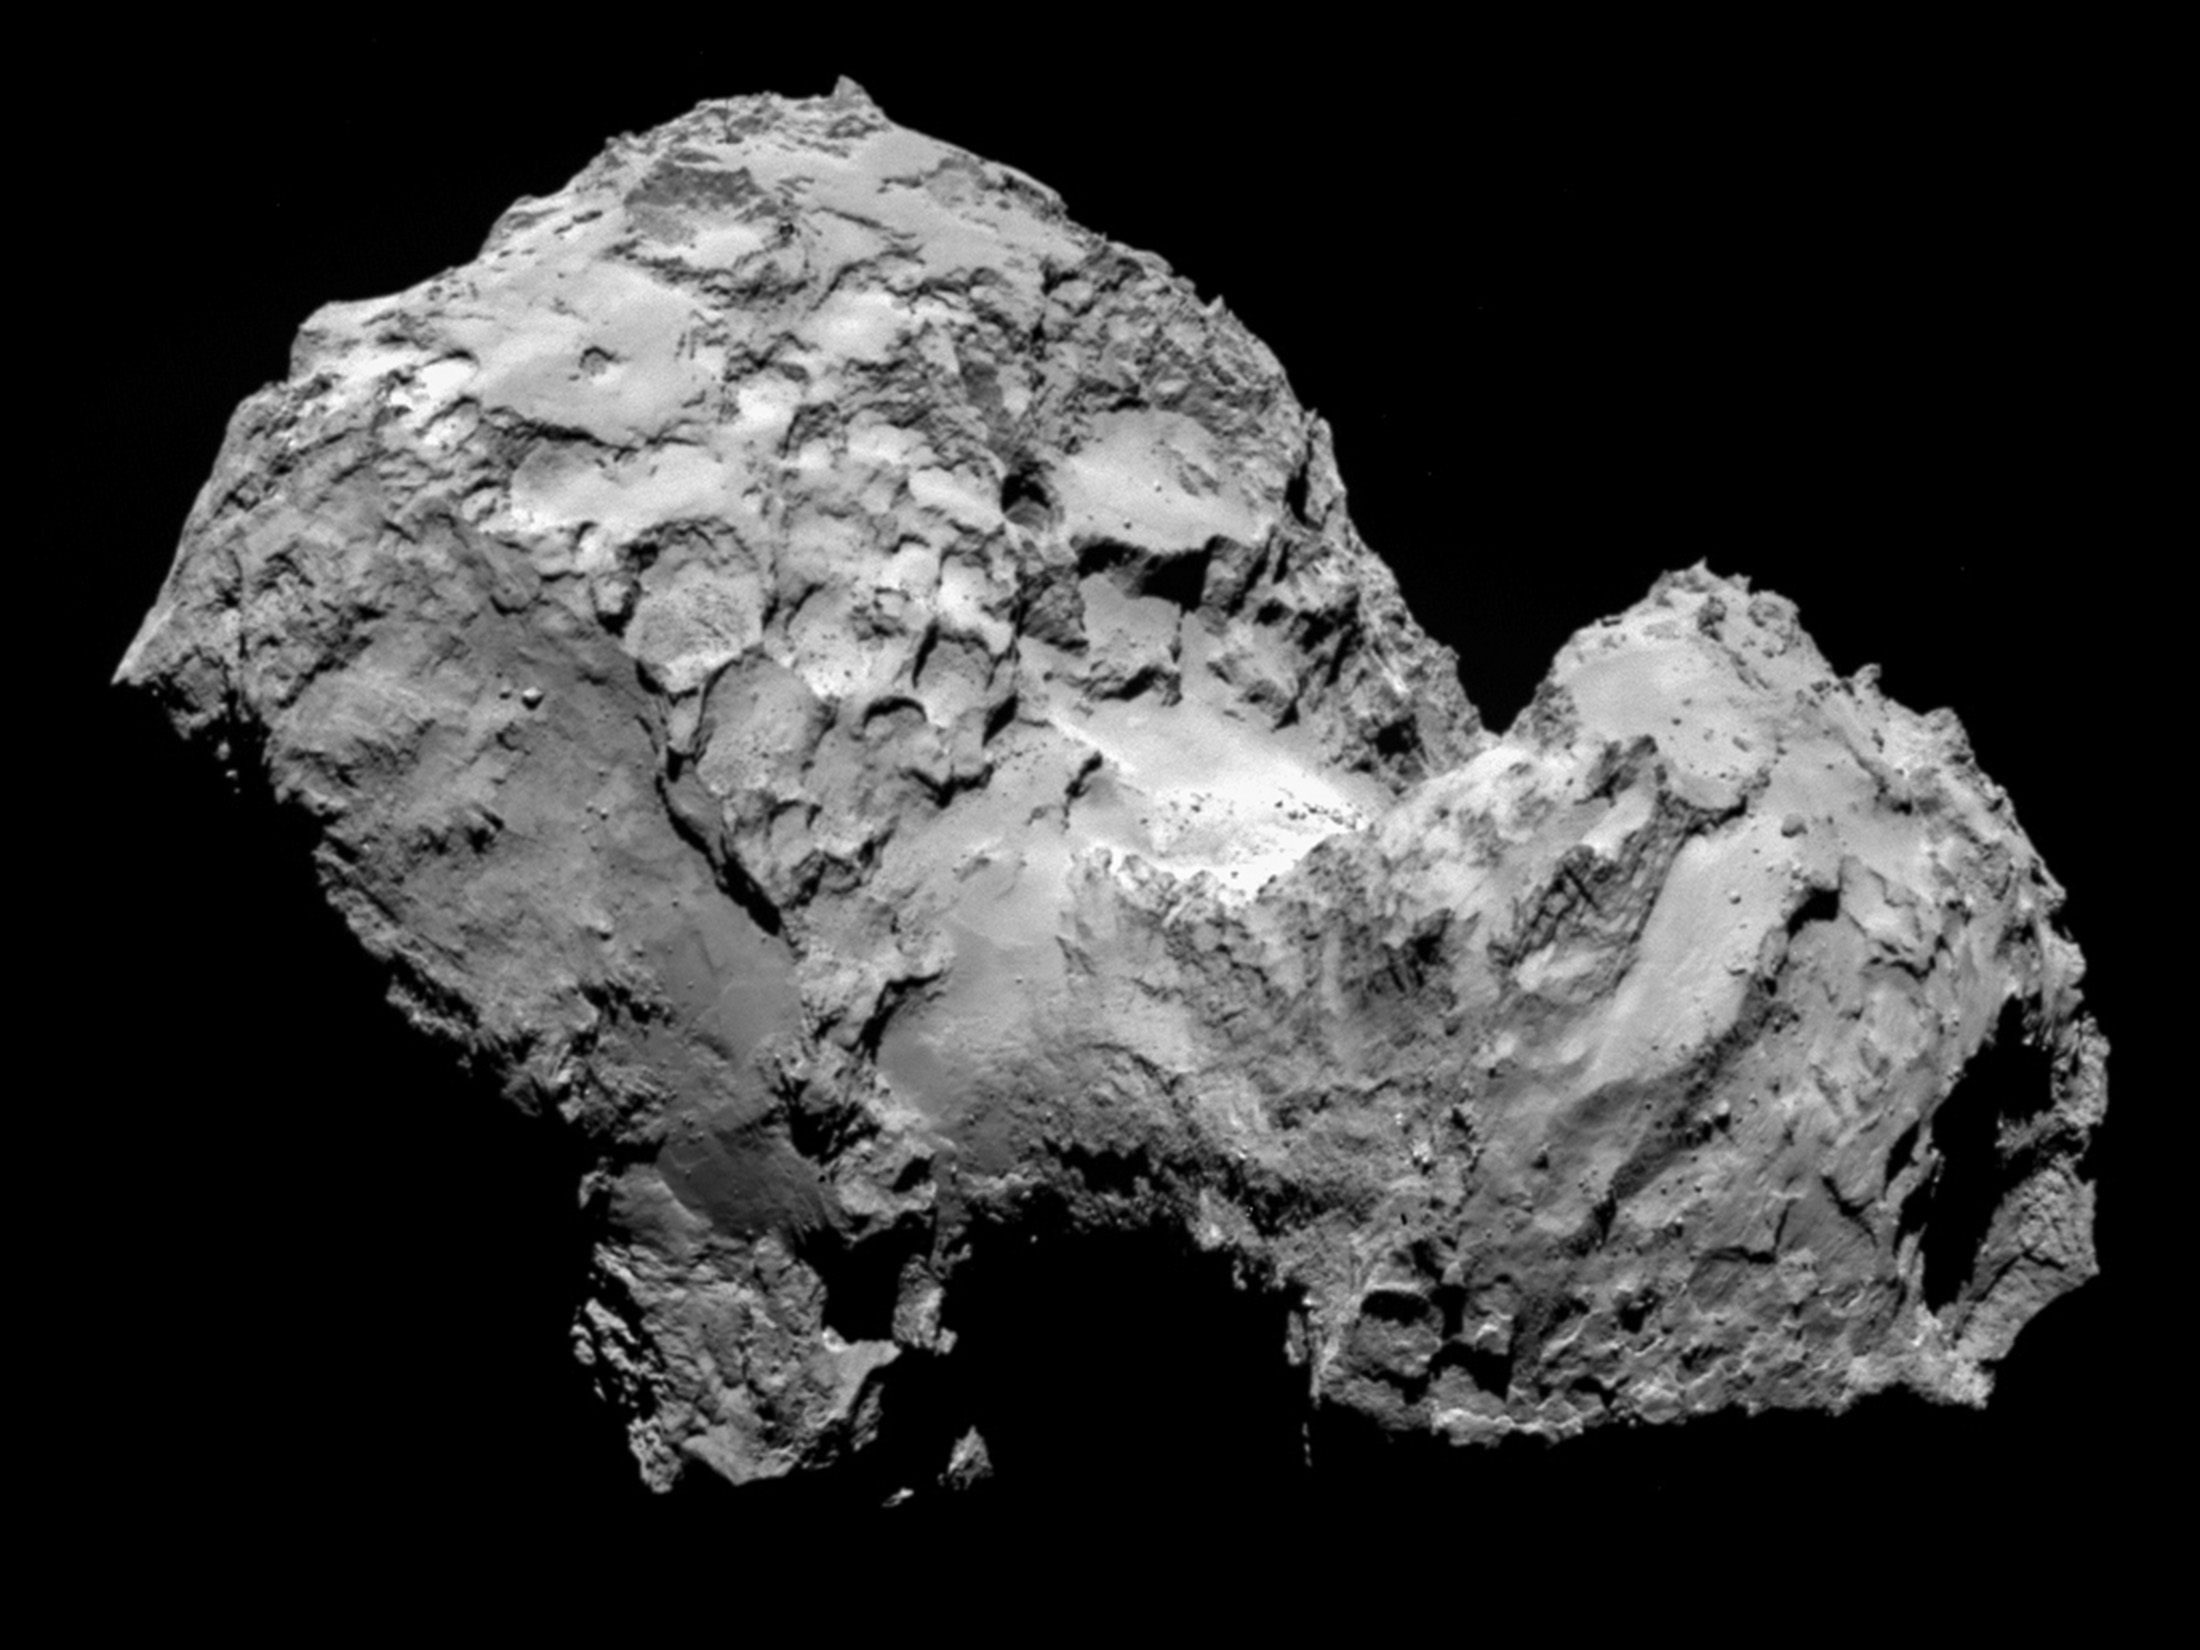 A handout photo of comet 67P/Churyumov-Gerasimenko by Rosetta?s OSIRIS narrow-angle camera